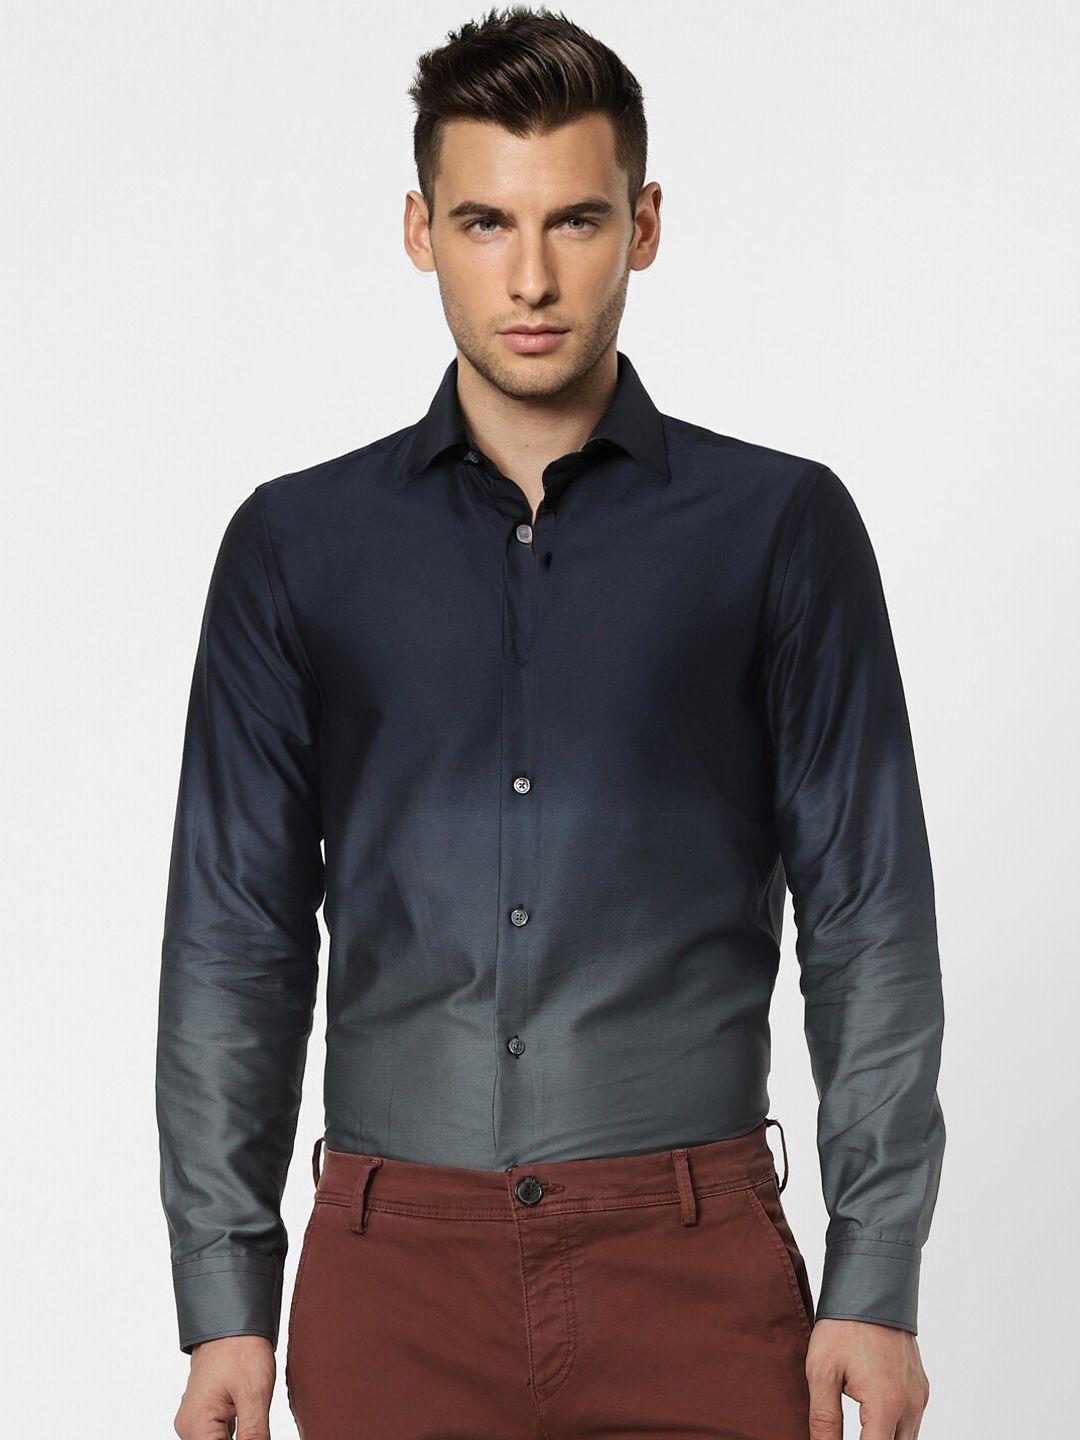 jack & jones men navy blue & grey slim fit opaque colourblocked casual cotton shirt